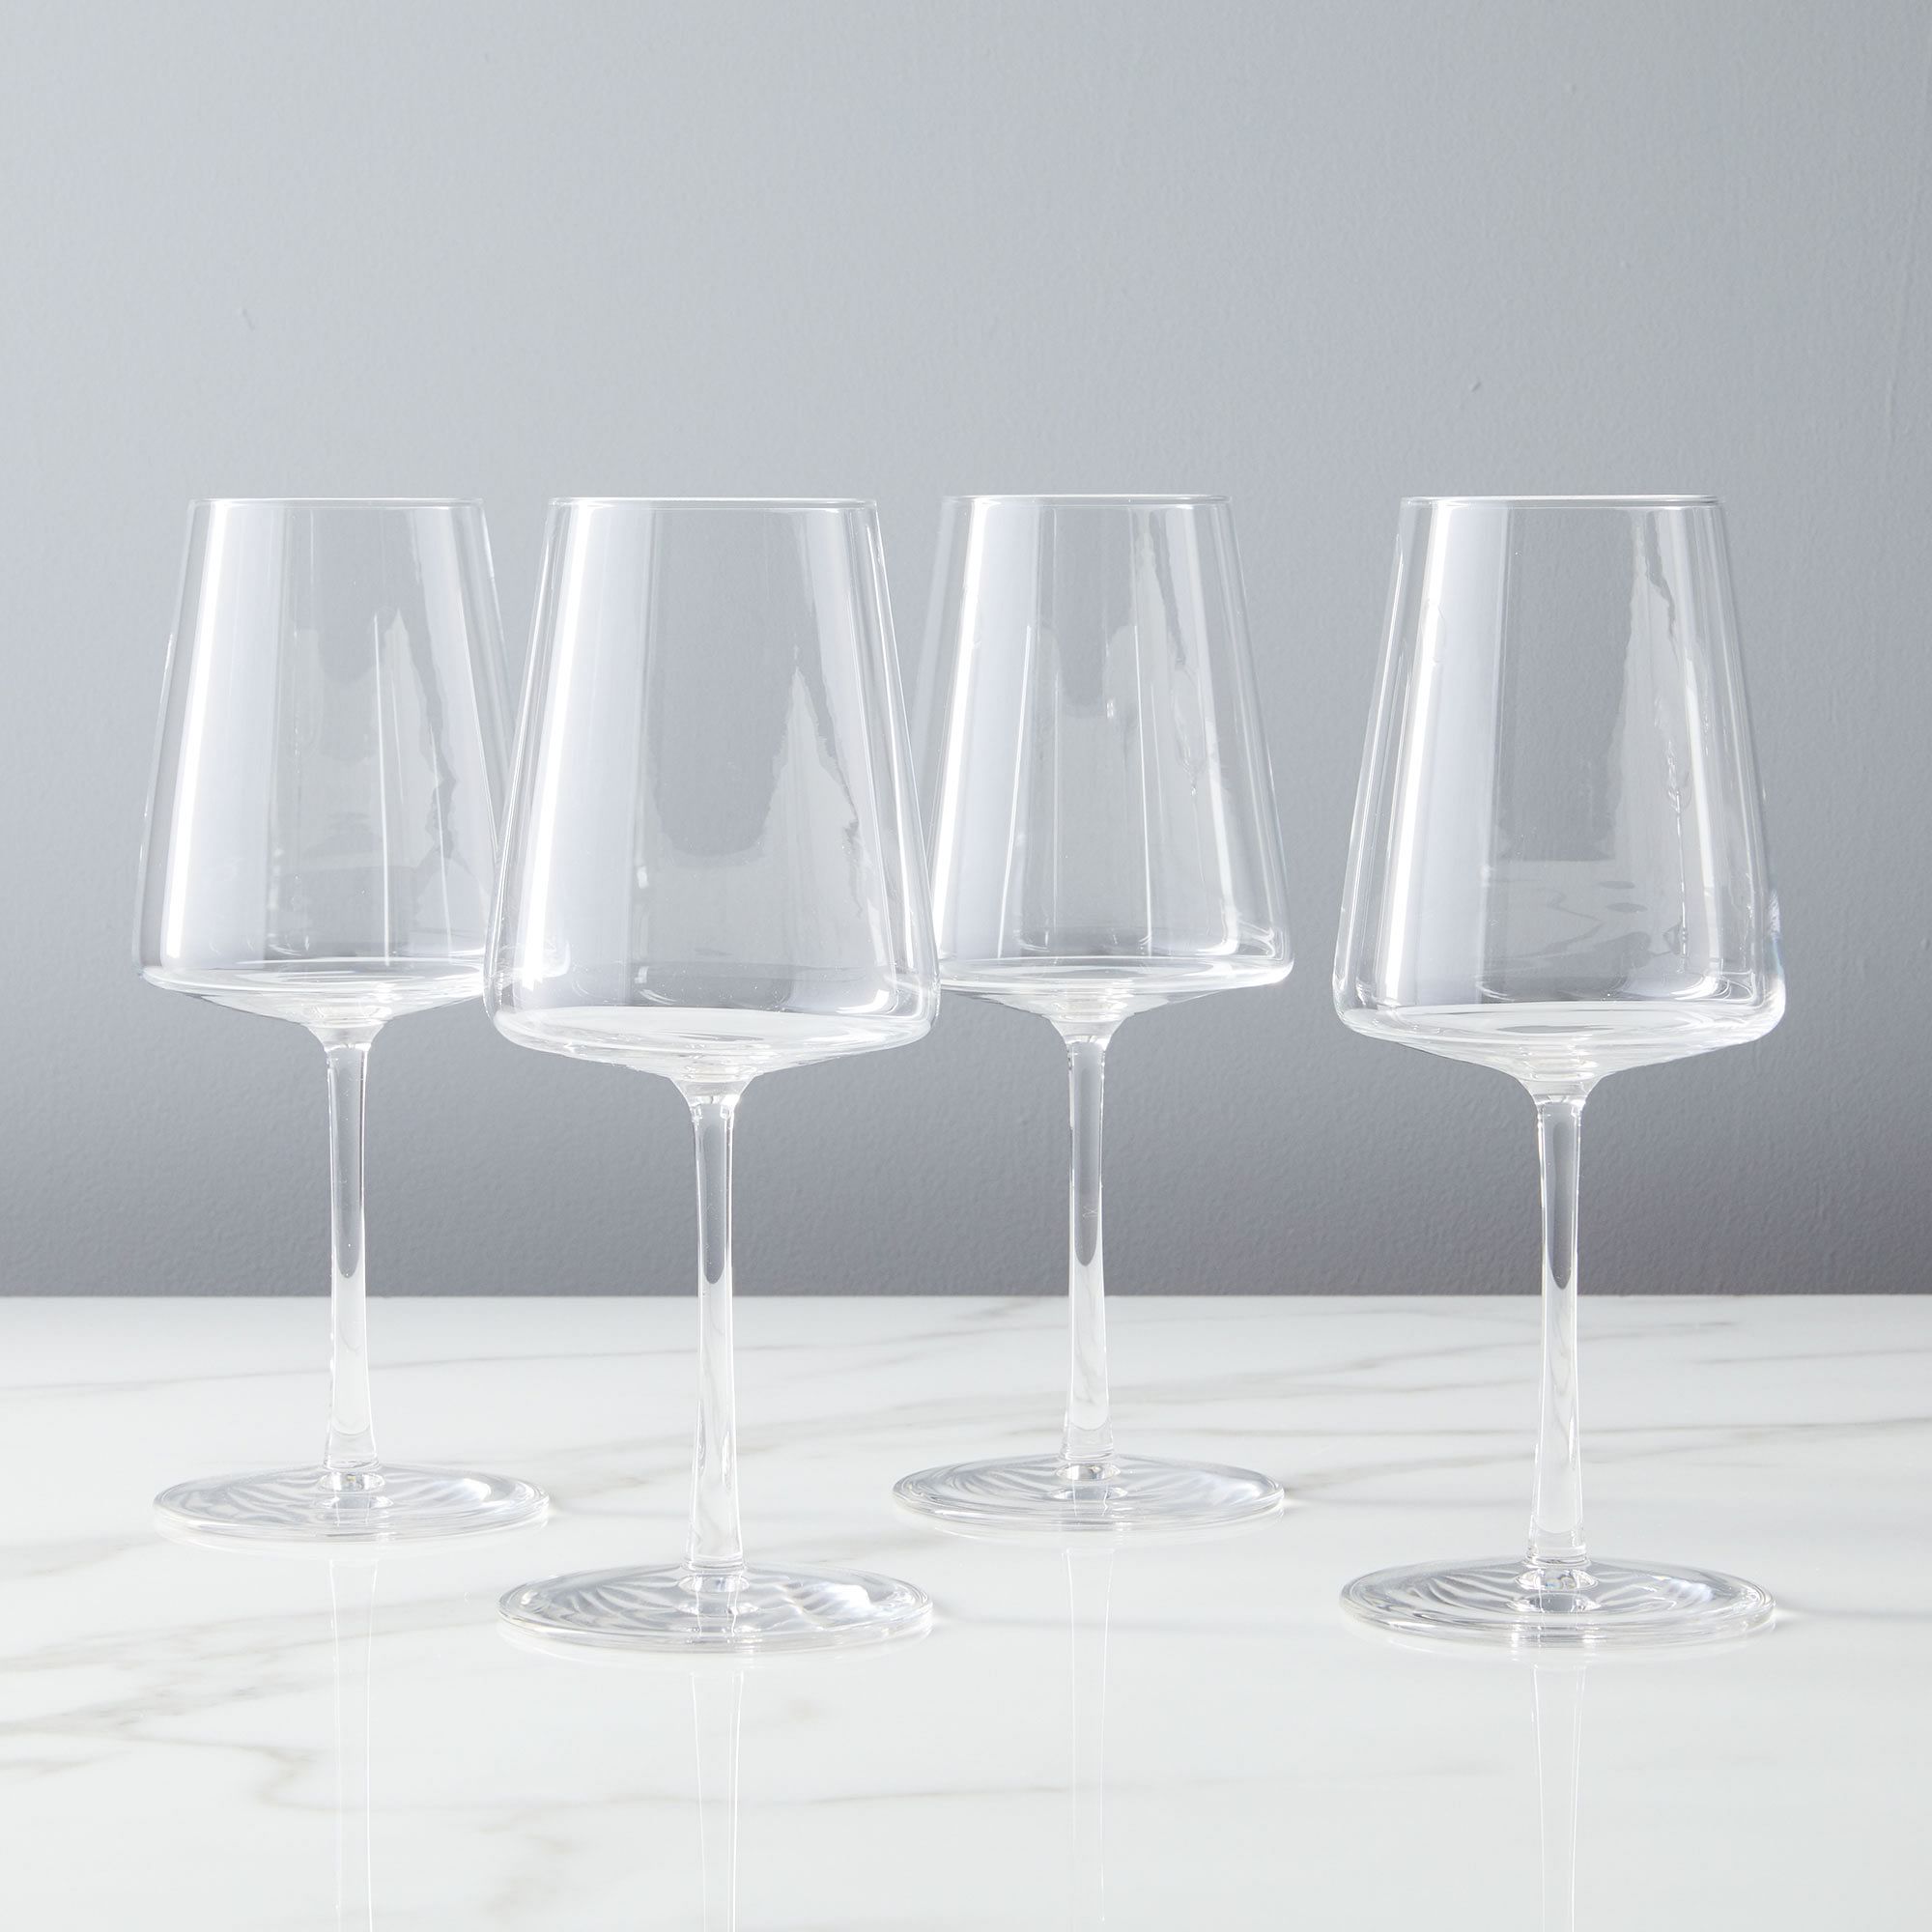 Horizon Lead-Free Crystal White Wine Glass Sets | West Elm